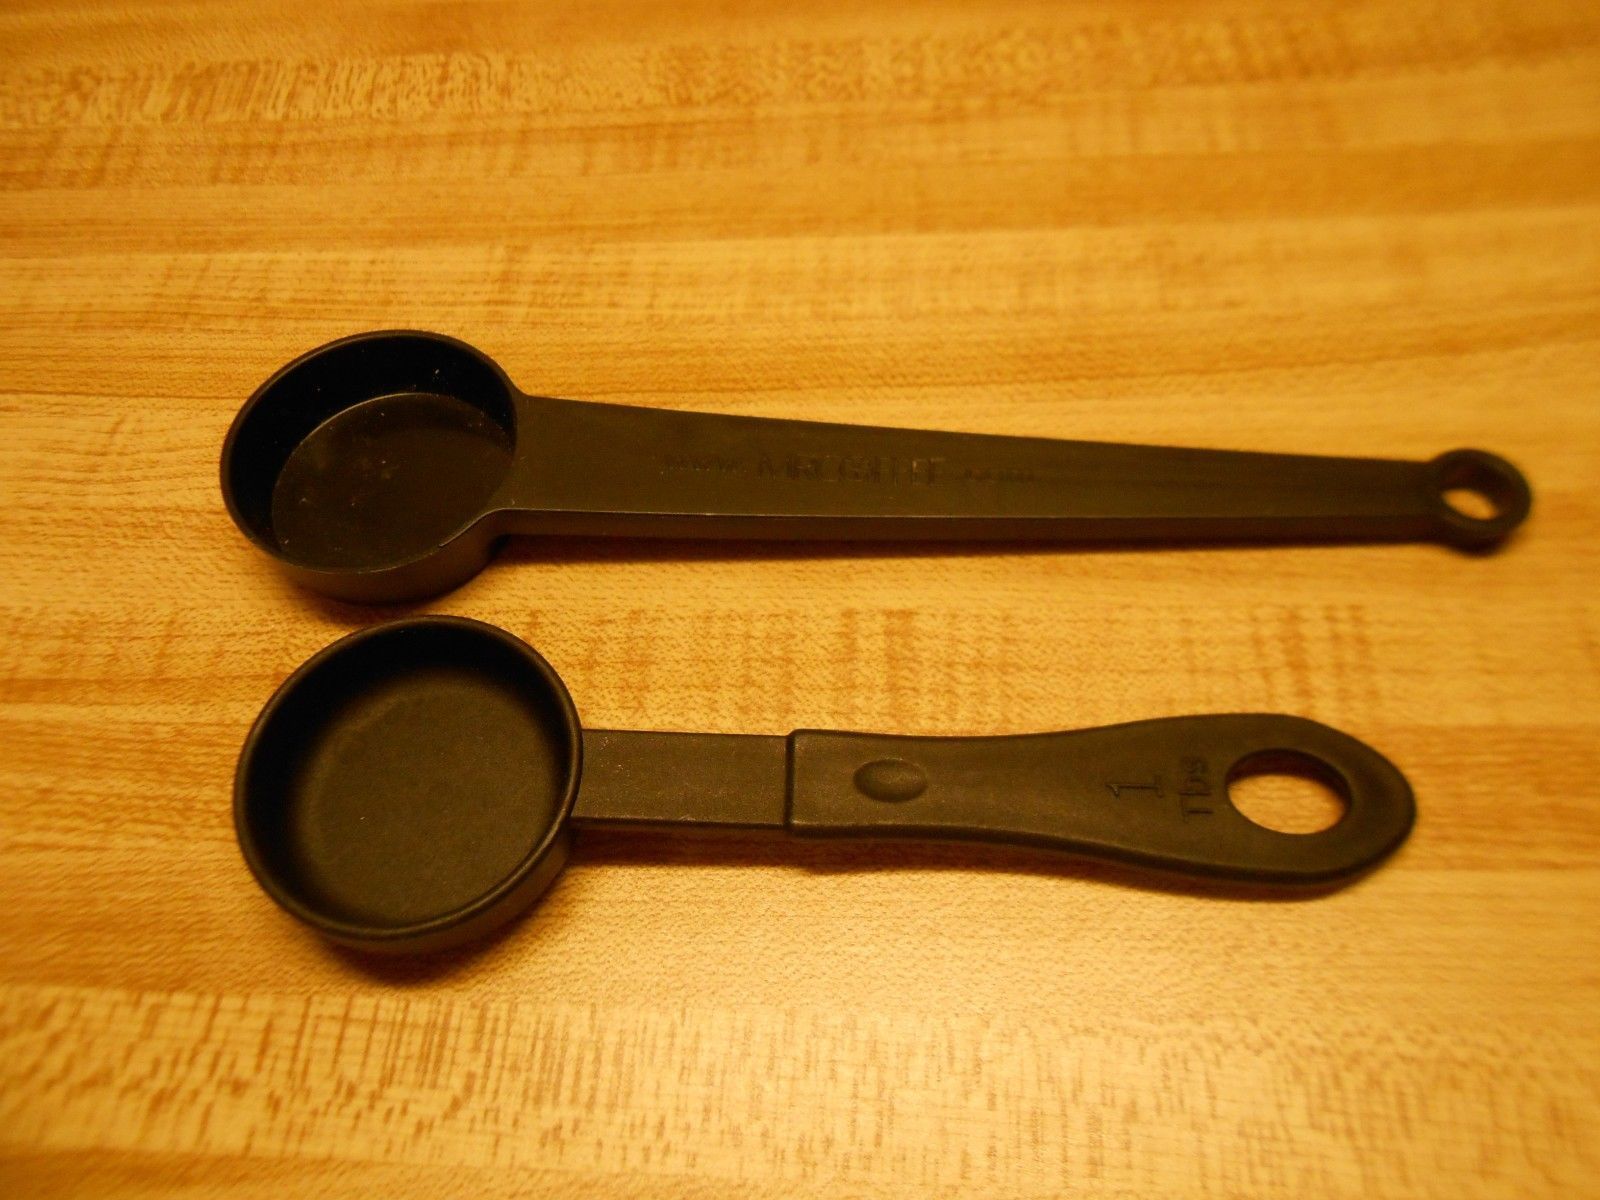 Mr coffee scoop and generic coffee scoop both 1 tablespoon capacity - $14.99